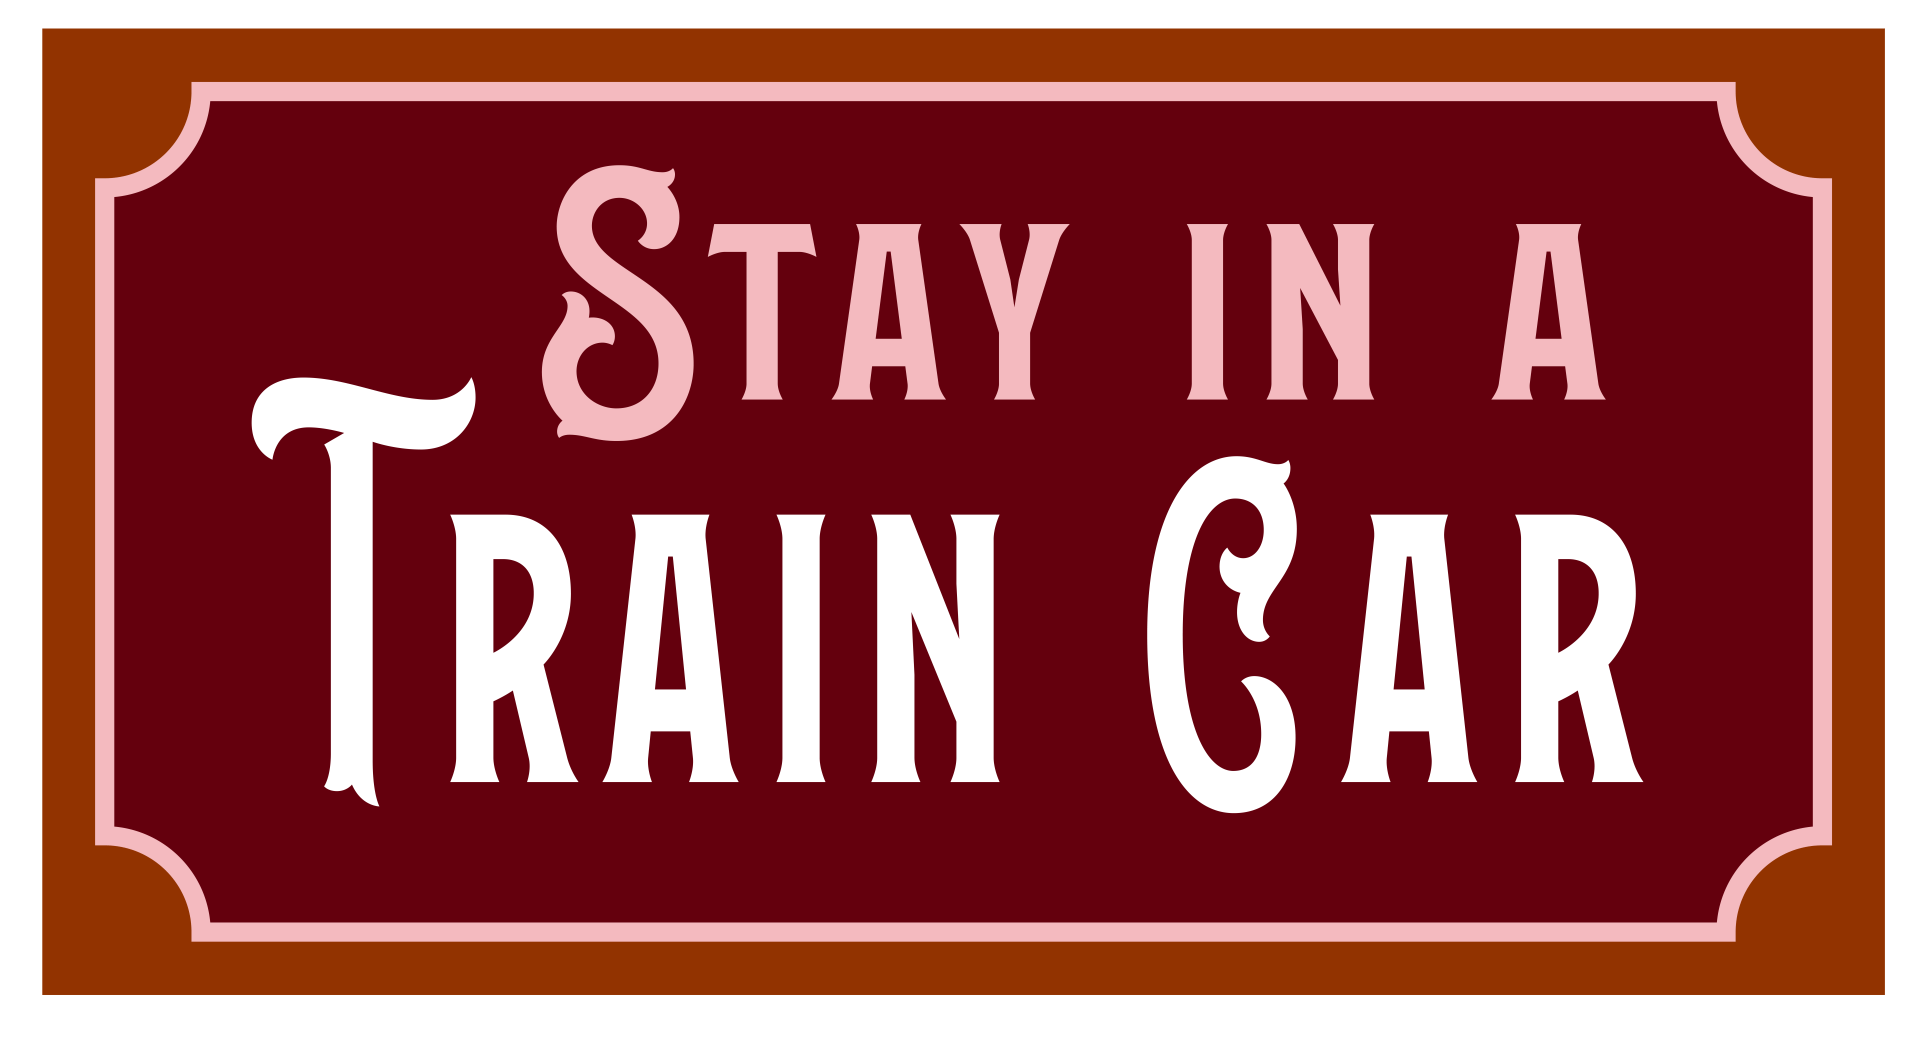 Train Car sign